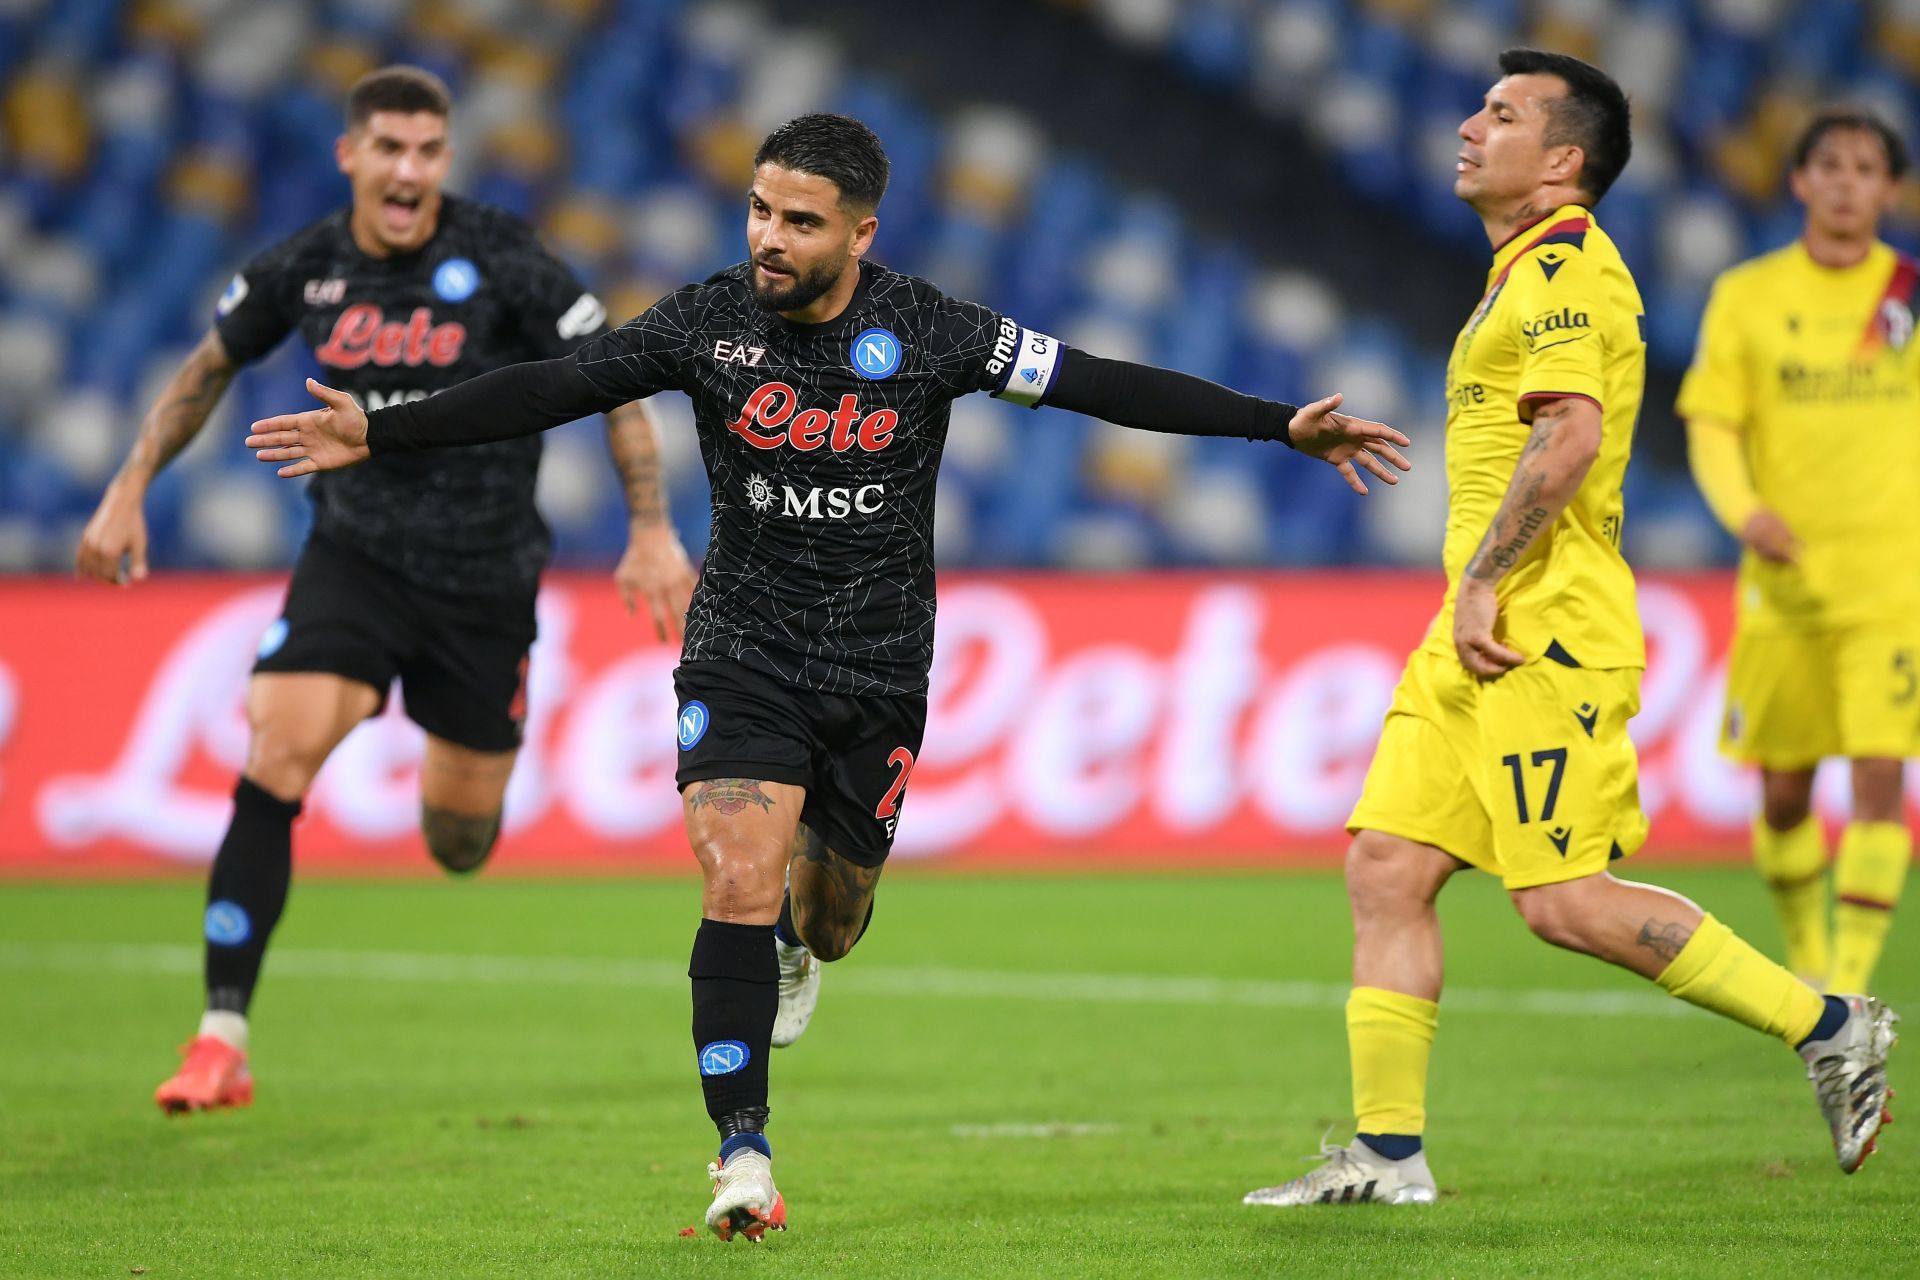 SSC Napoli take on Salernitana in a Serie A game on Sunday